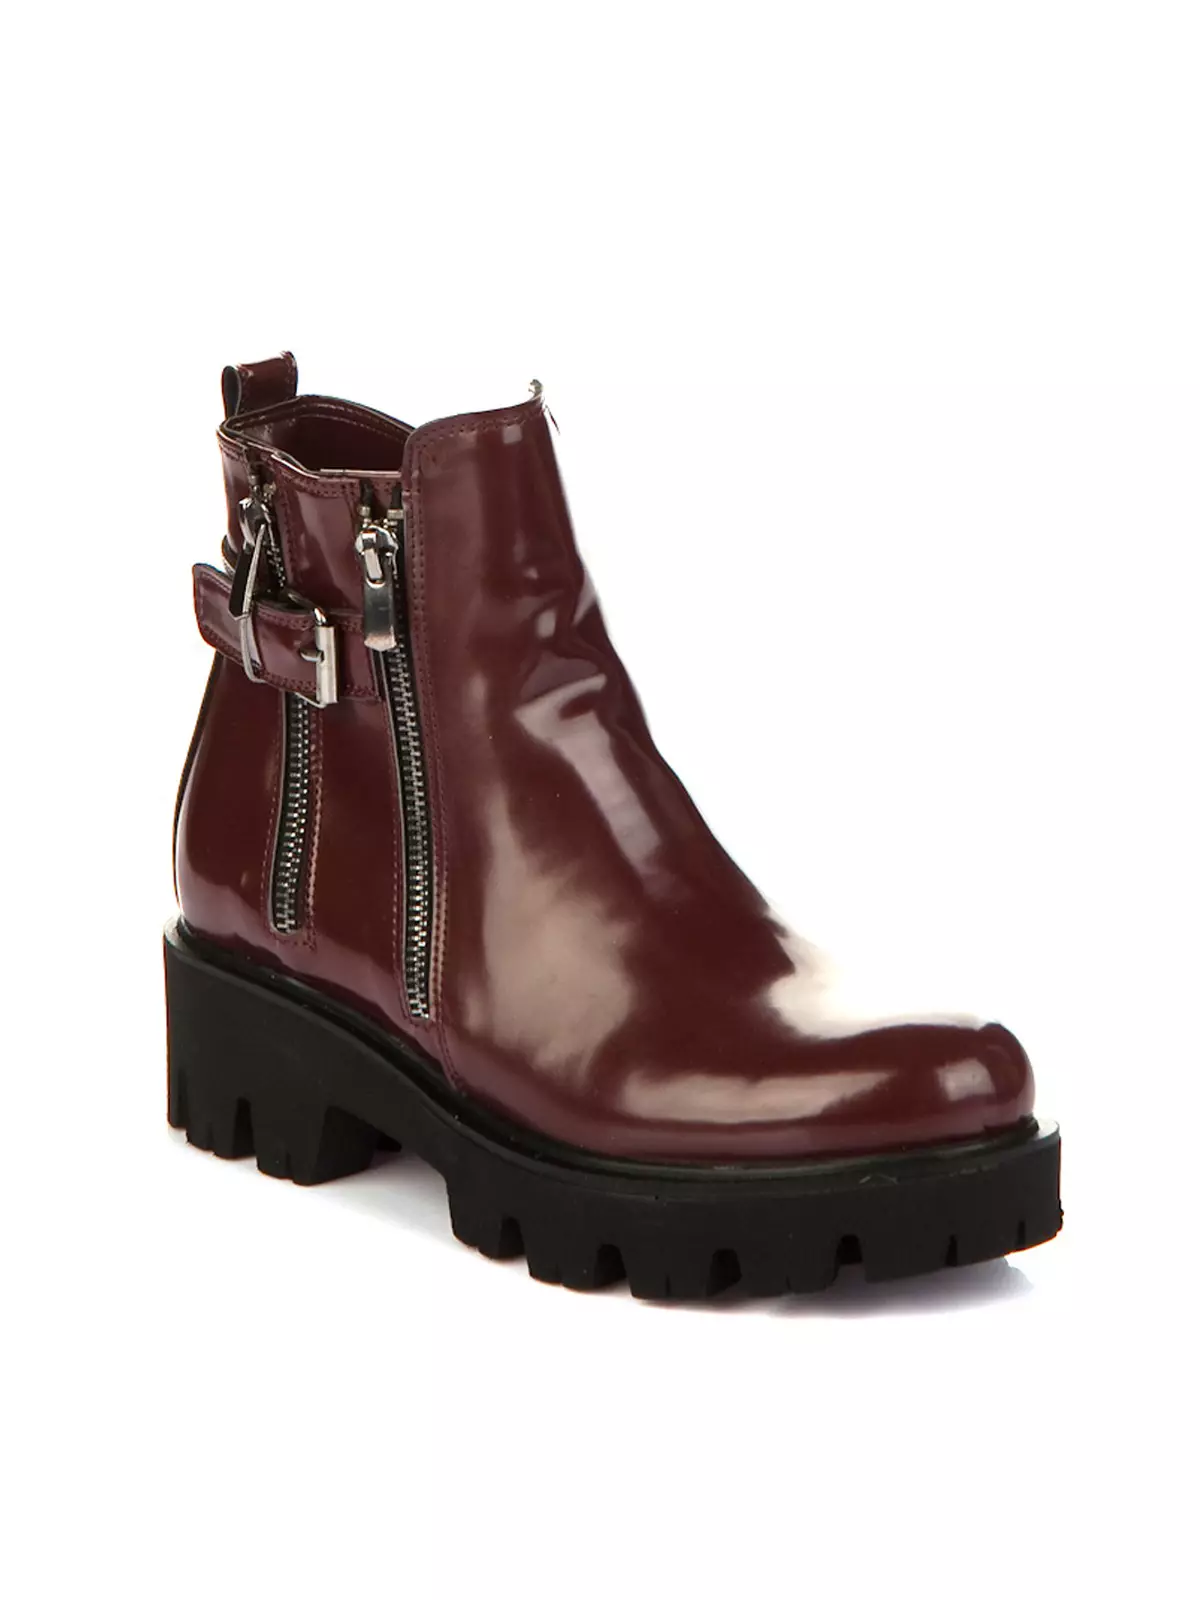 Boots (135 wêne): Trendên Fashion 2021, ji Rock Rock, Eva, Camel, Grinders, How to Wear Derby With Jeans, Mîlîtar & Burgundy Style 1842_78